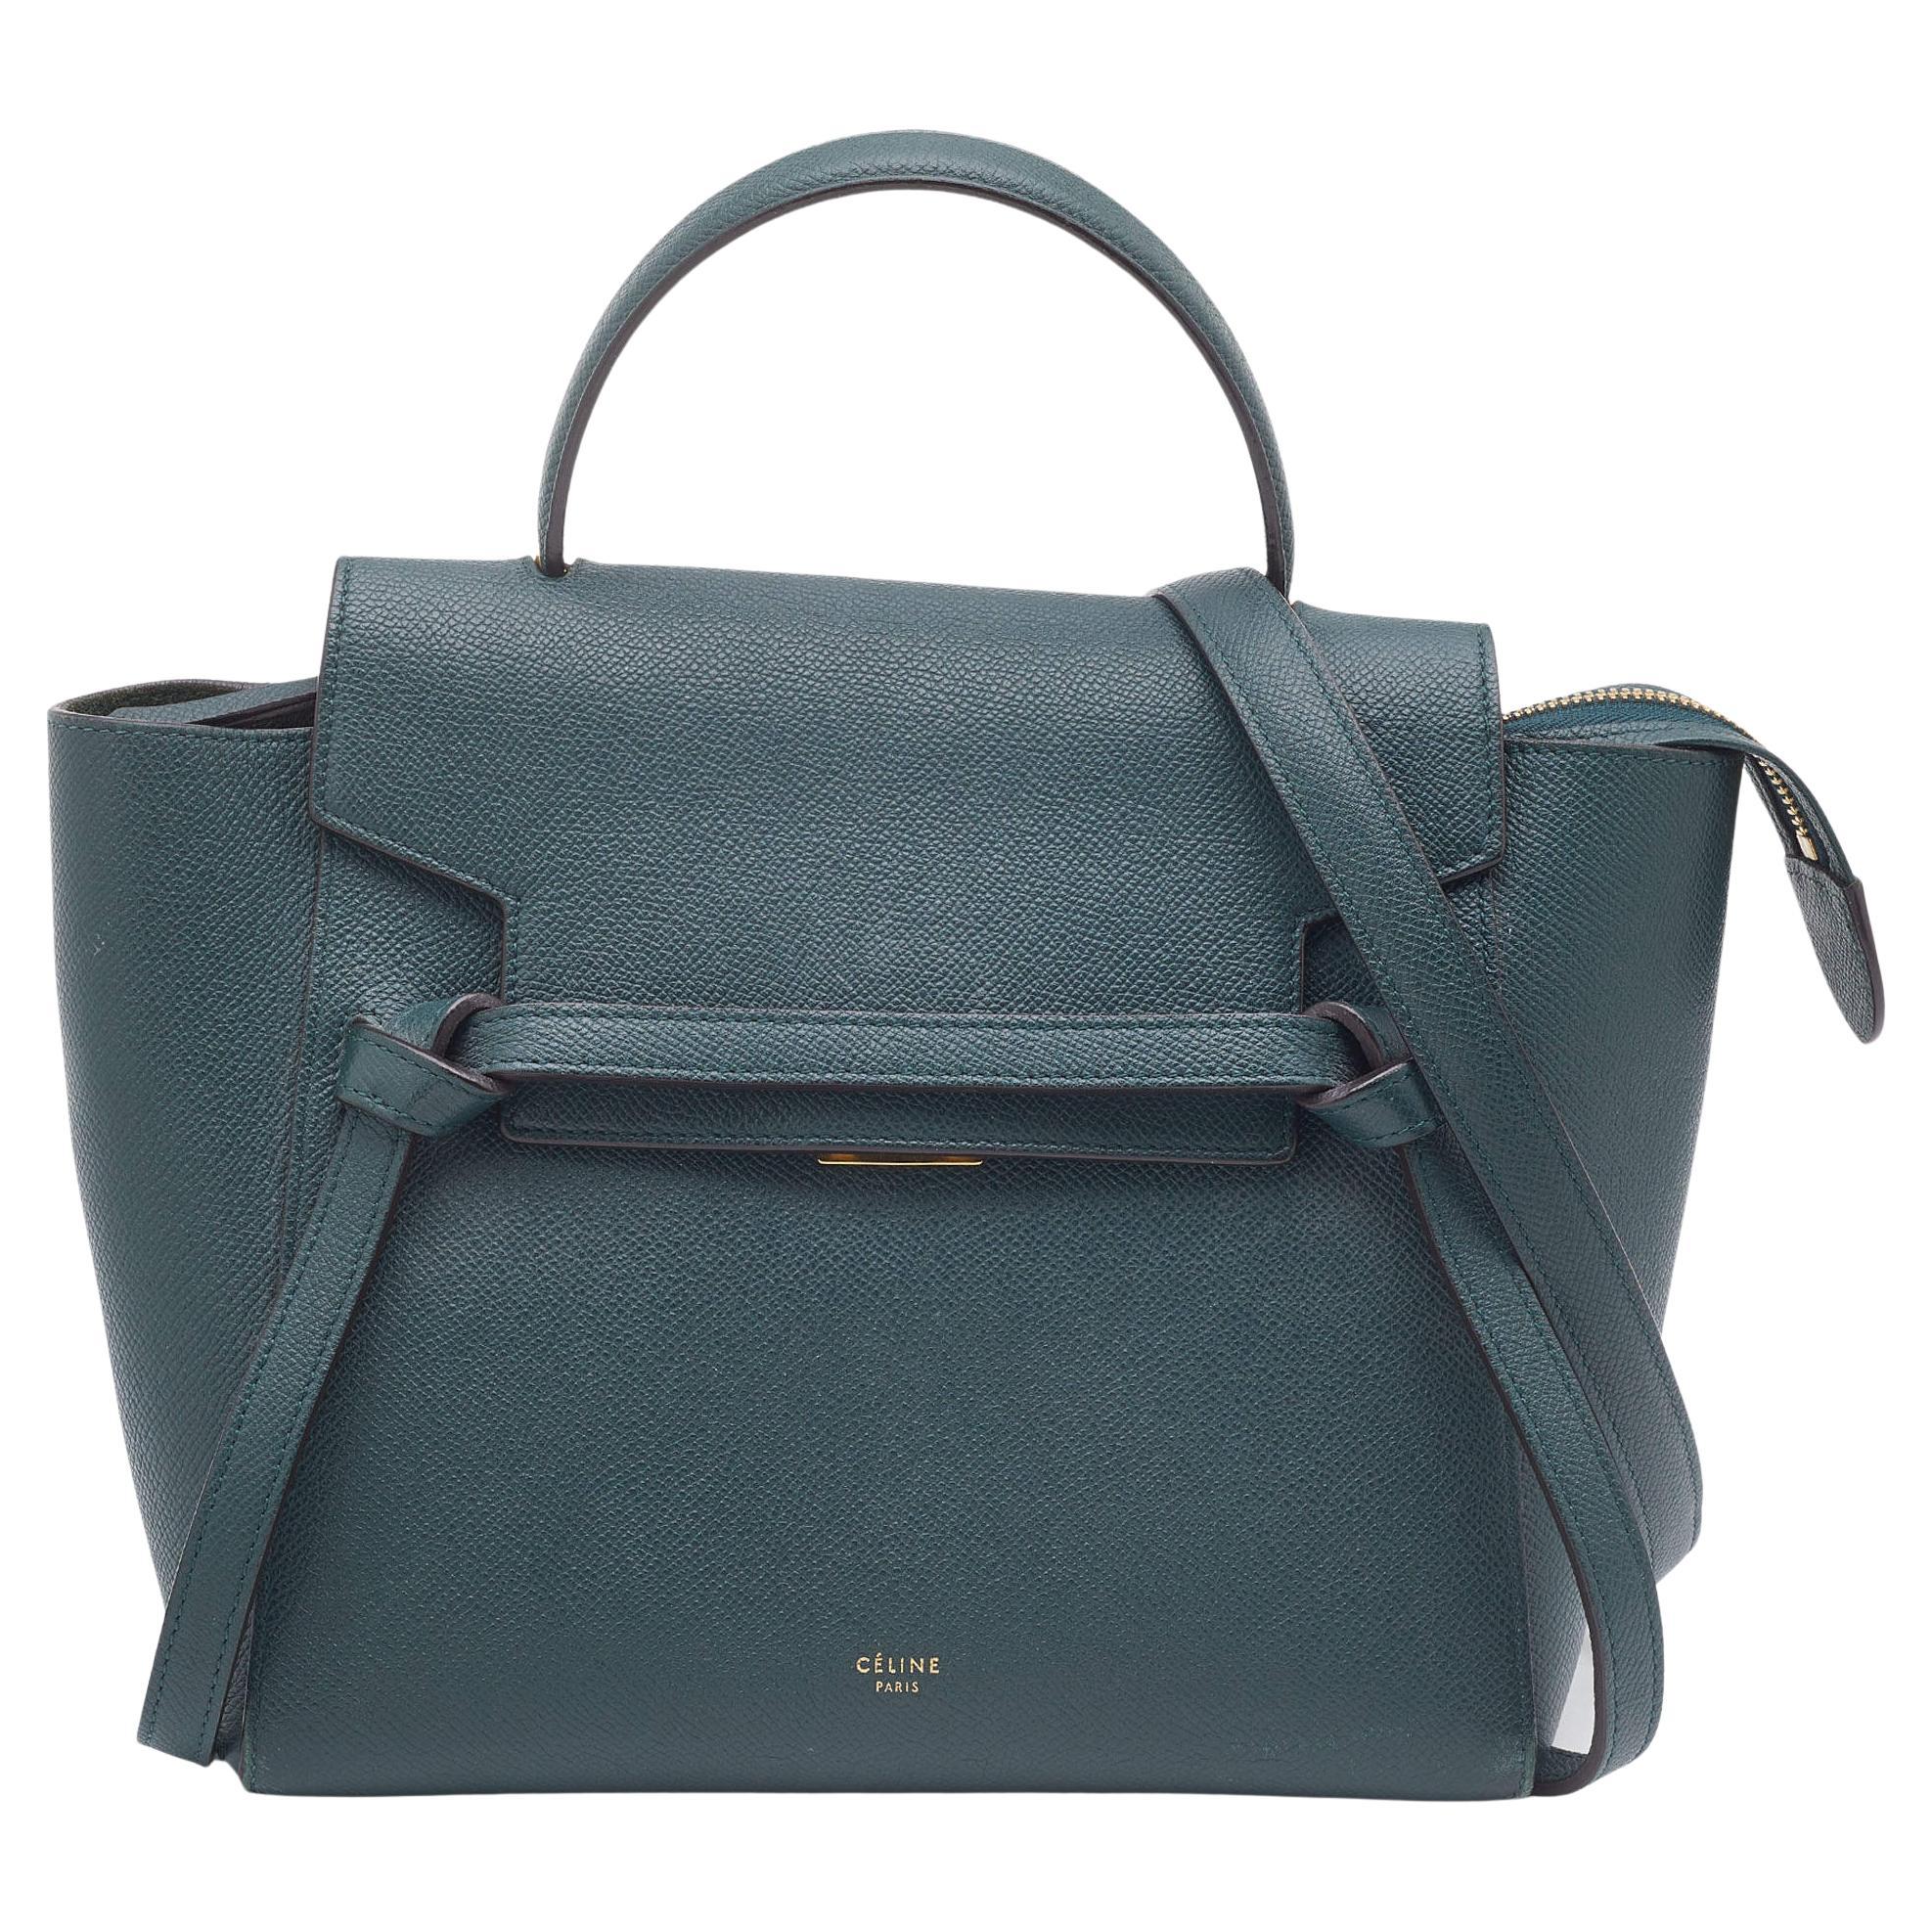 Celine Green Leather Micro Belt Top Handle Bag